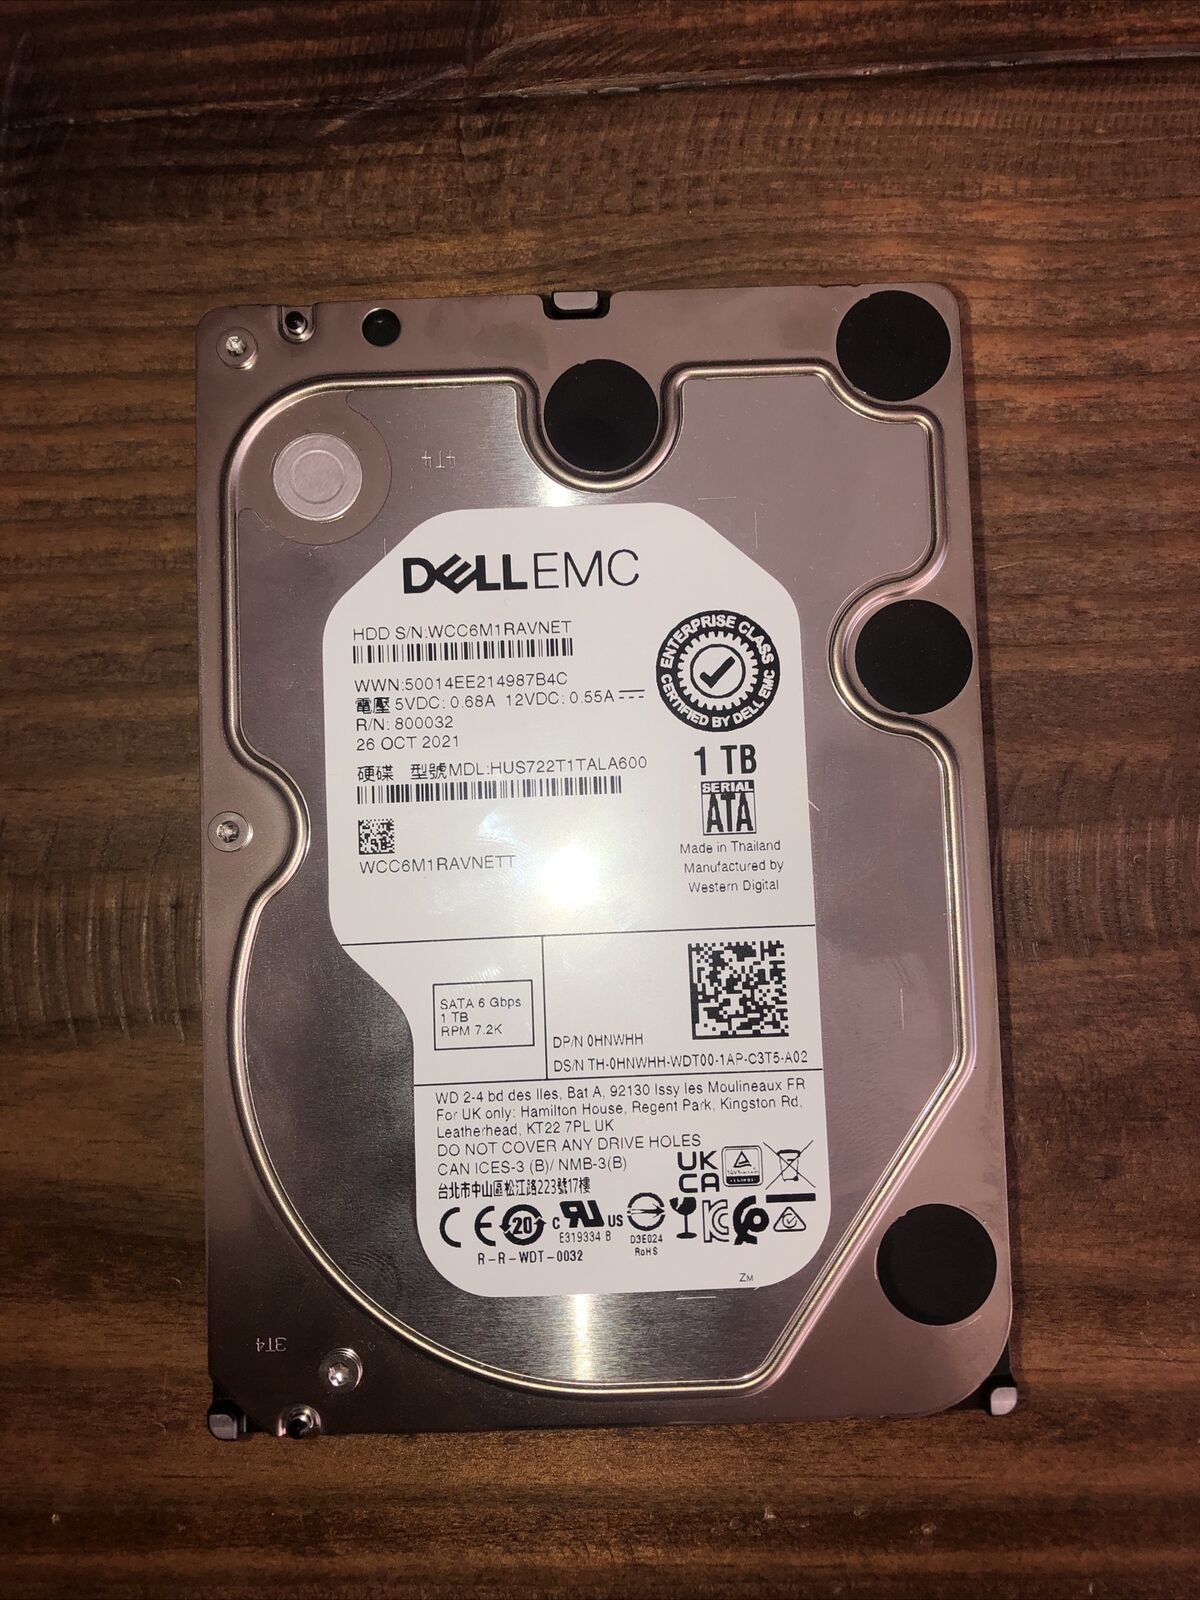 New Dell EMC 1 TB Hard Drives